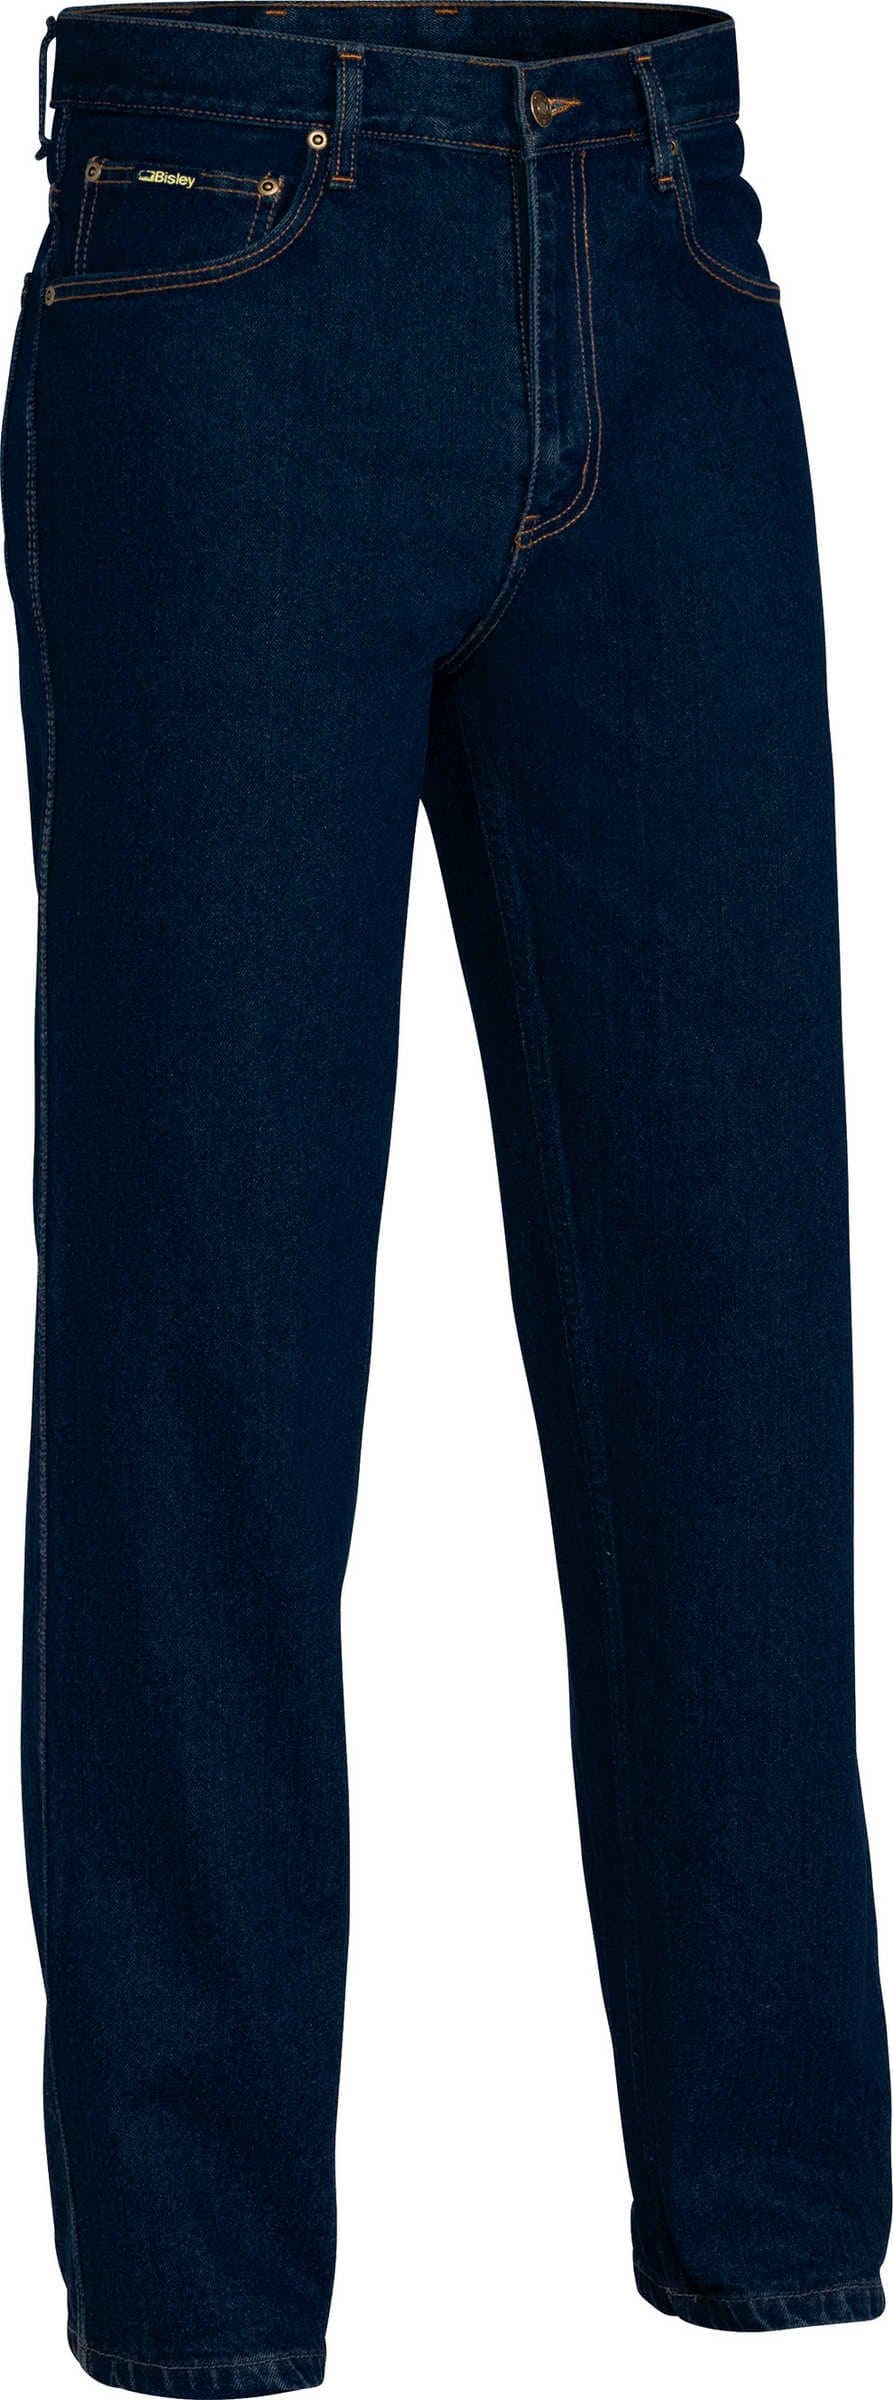 Bisley Rough Rider Denim Jeans - Blue (BP6050) - Trade Wear